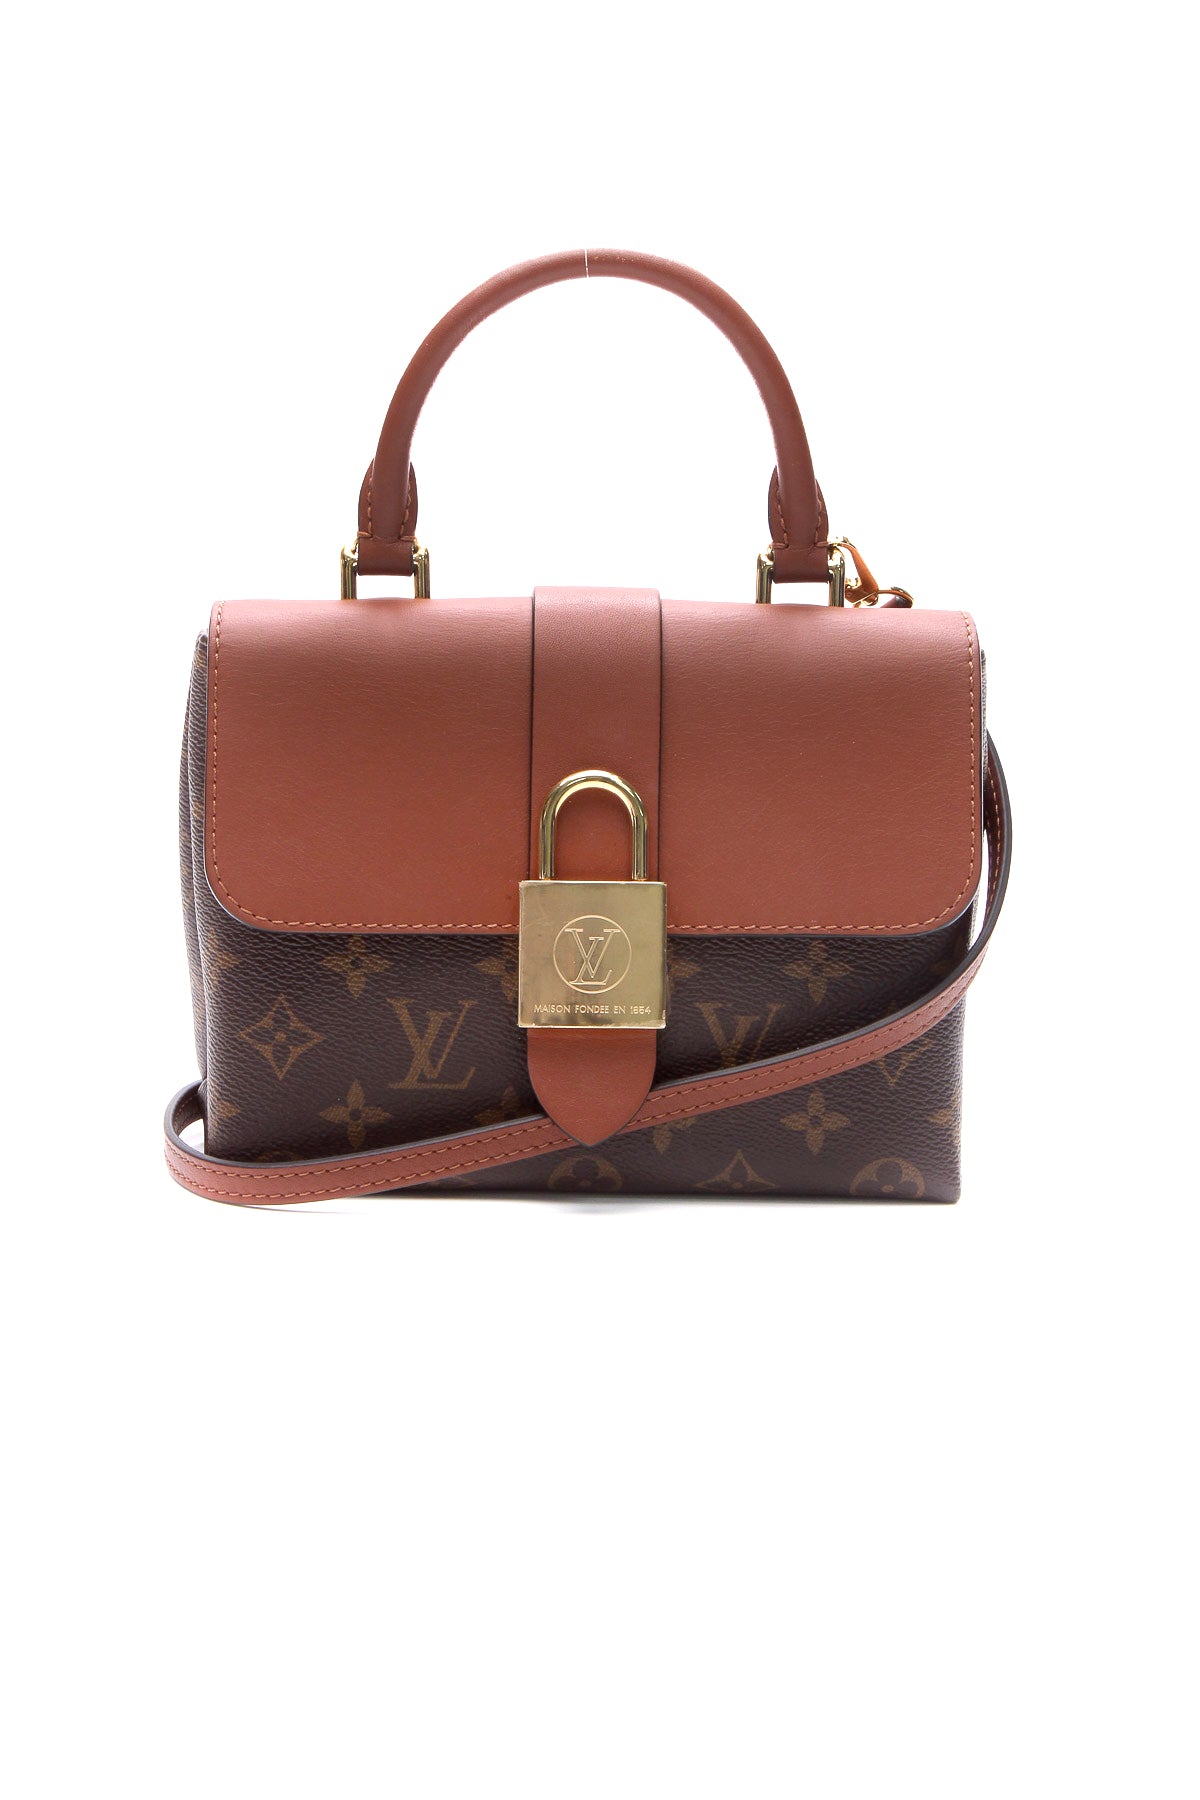 Louis Vuitton LV M45959 MINI DAUPHINE 經典老花迷你翻蓋斜背包